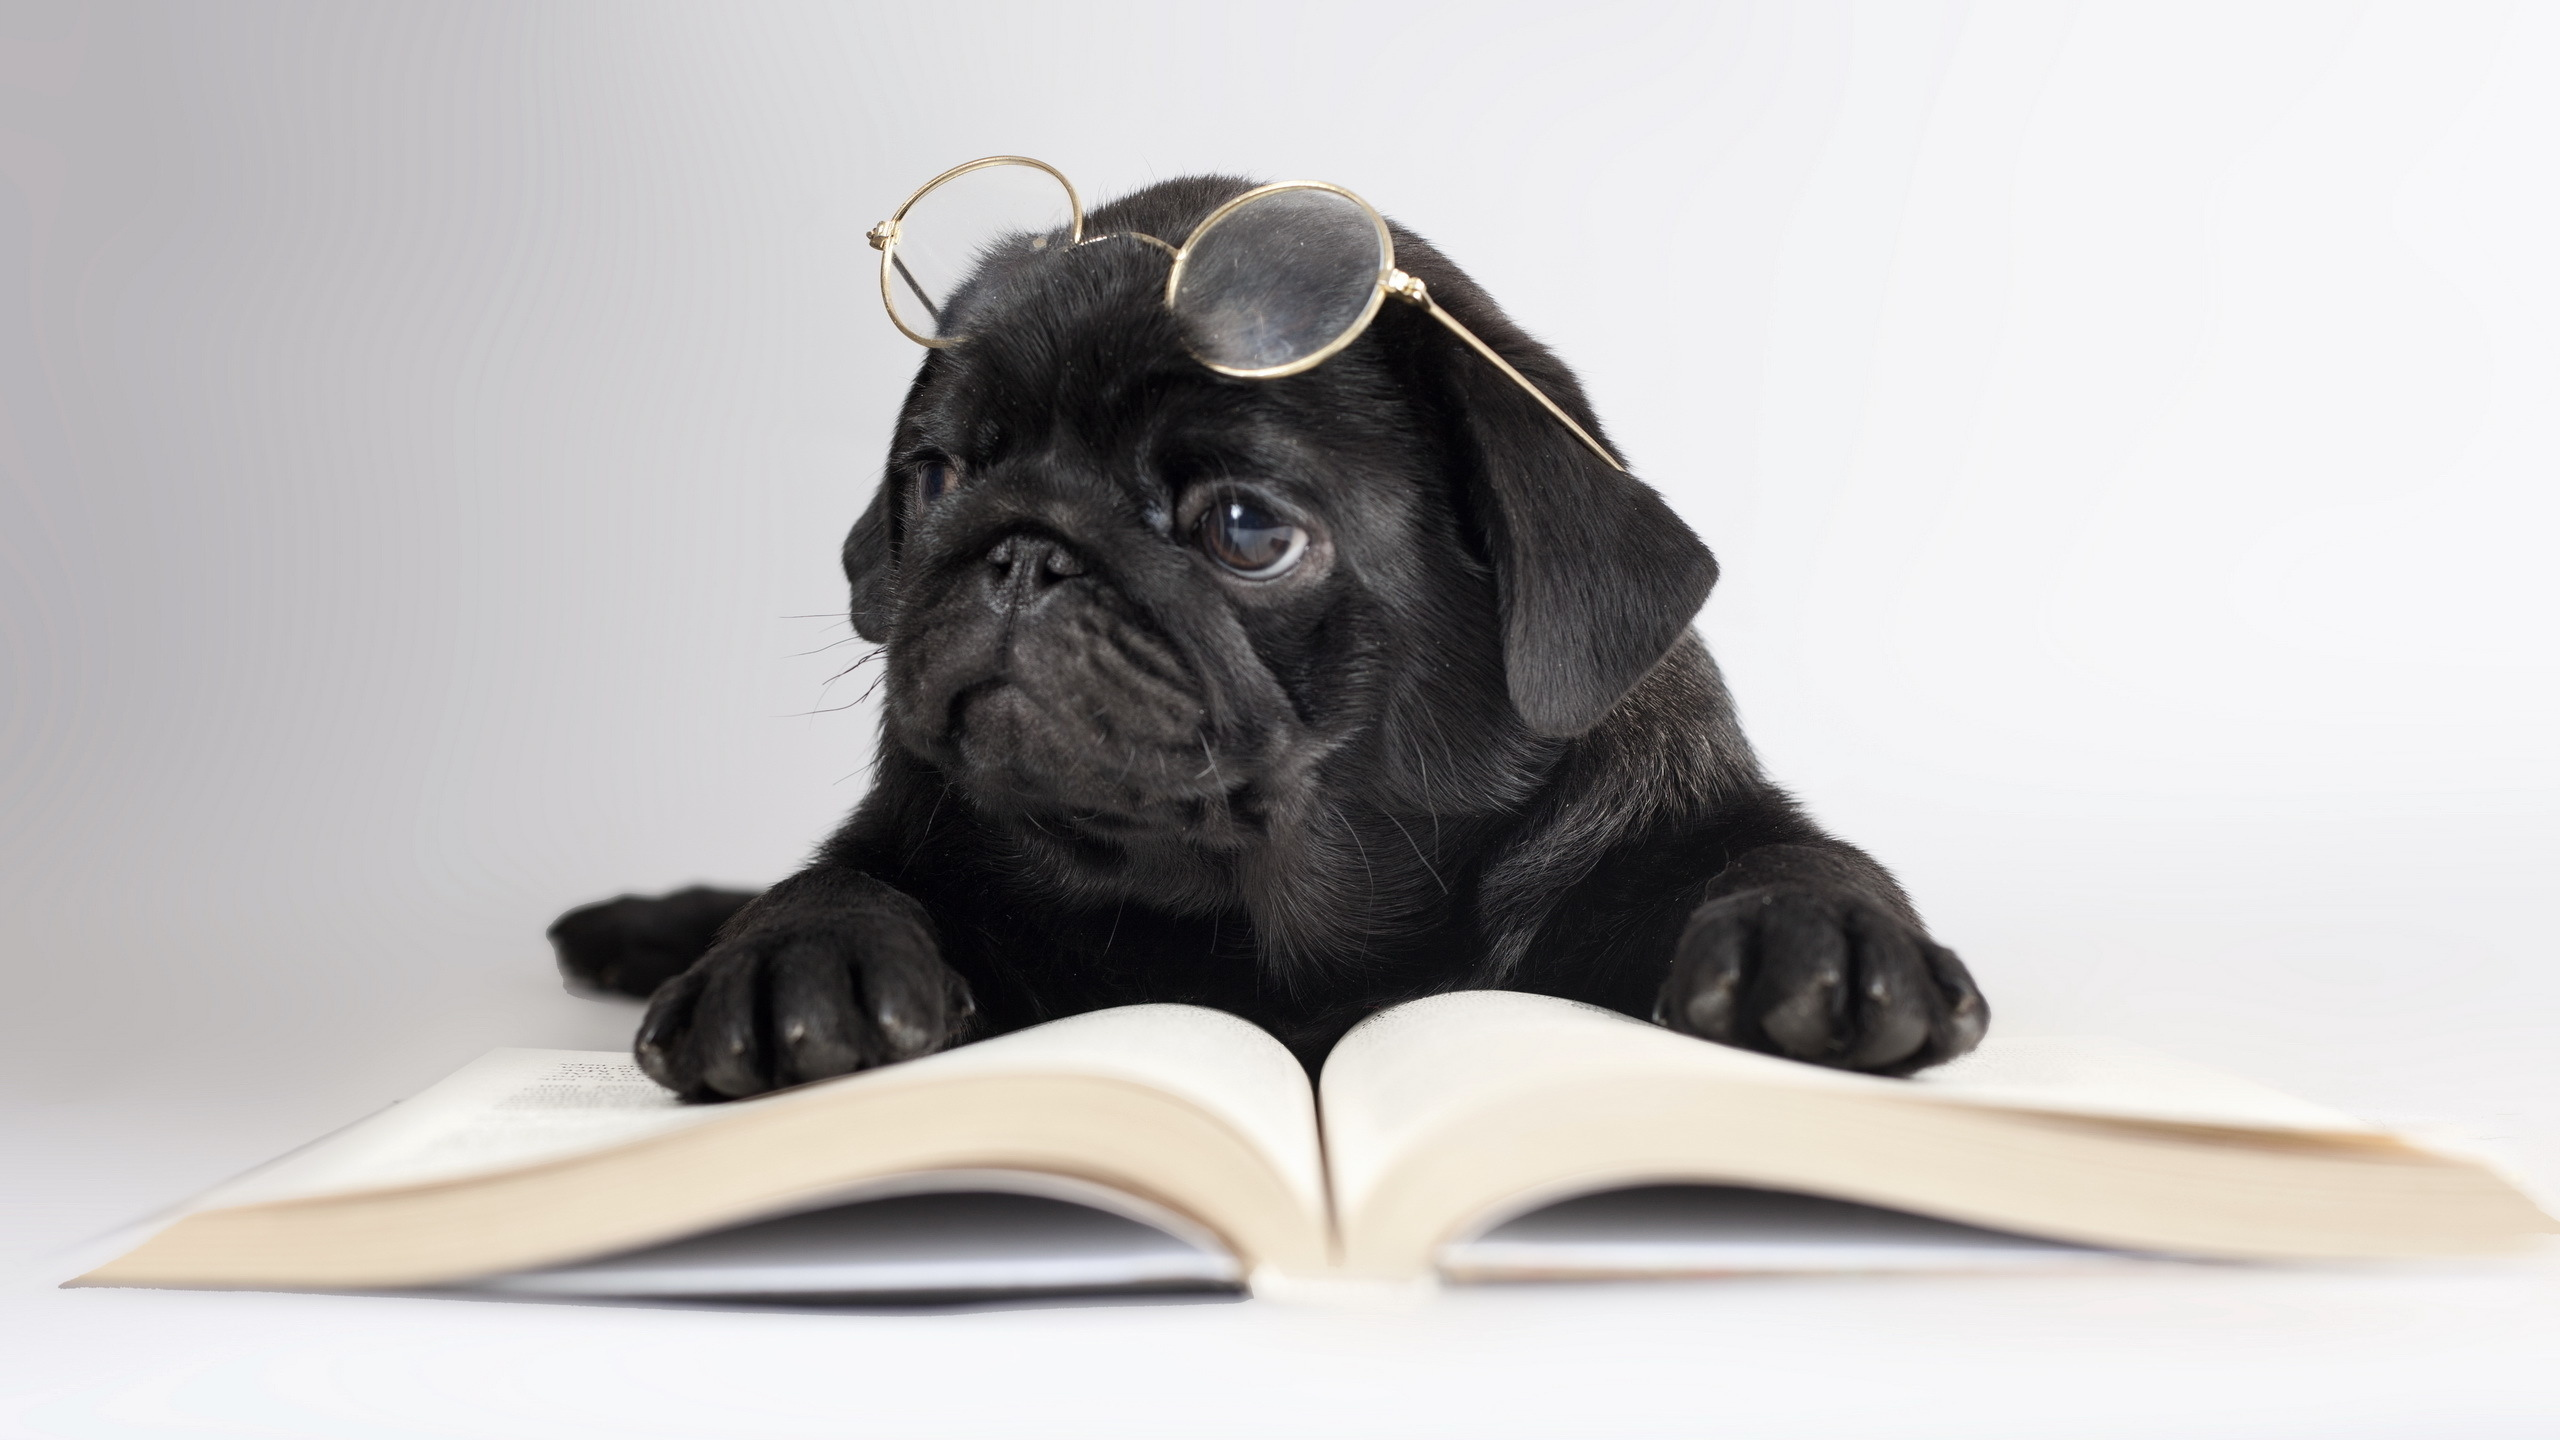 щенок, очки, книга